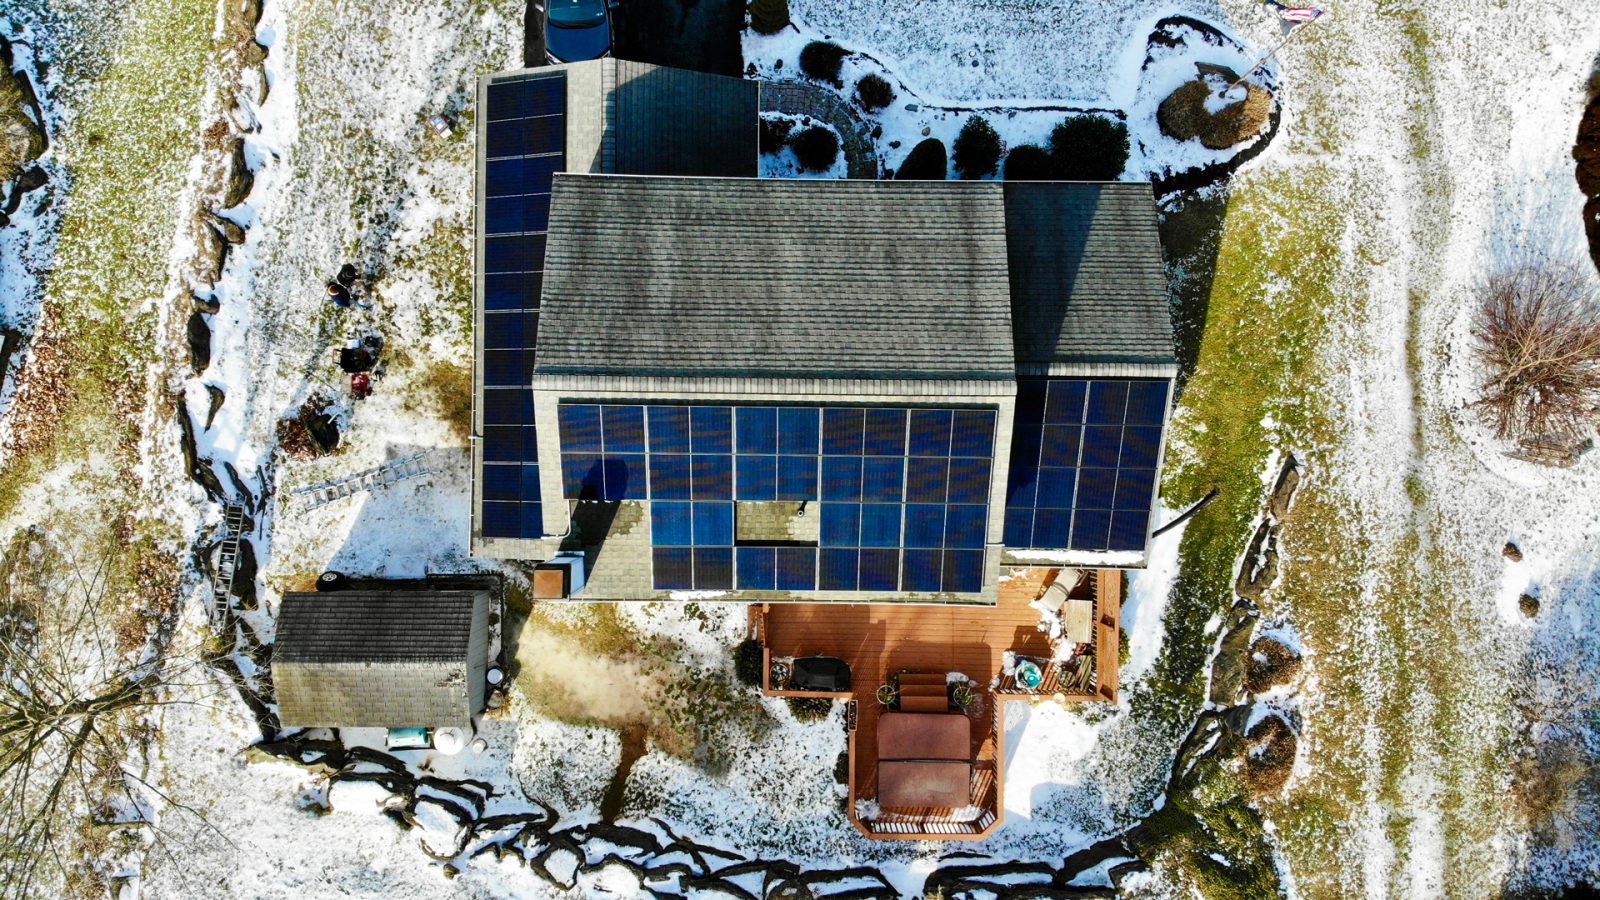 gordonville pa solar installation with 71 solar panels